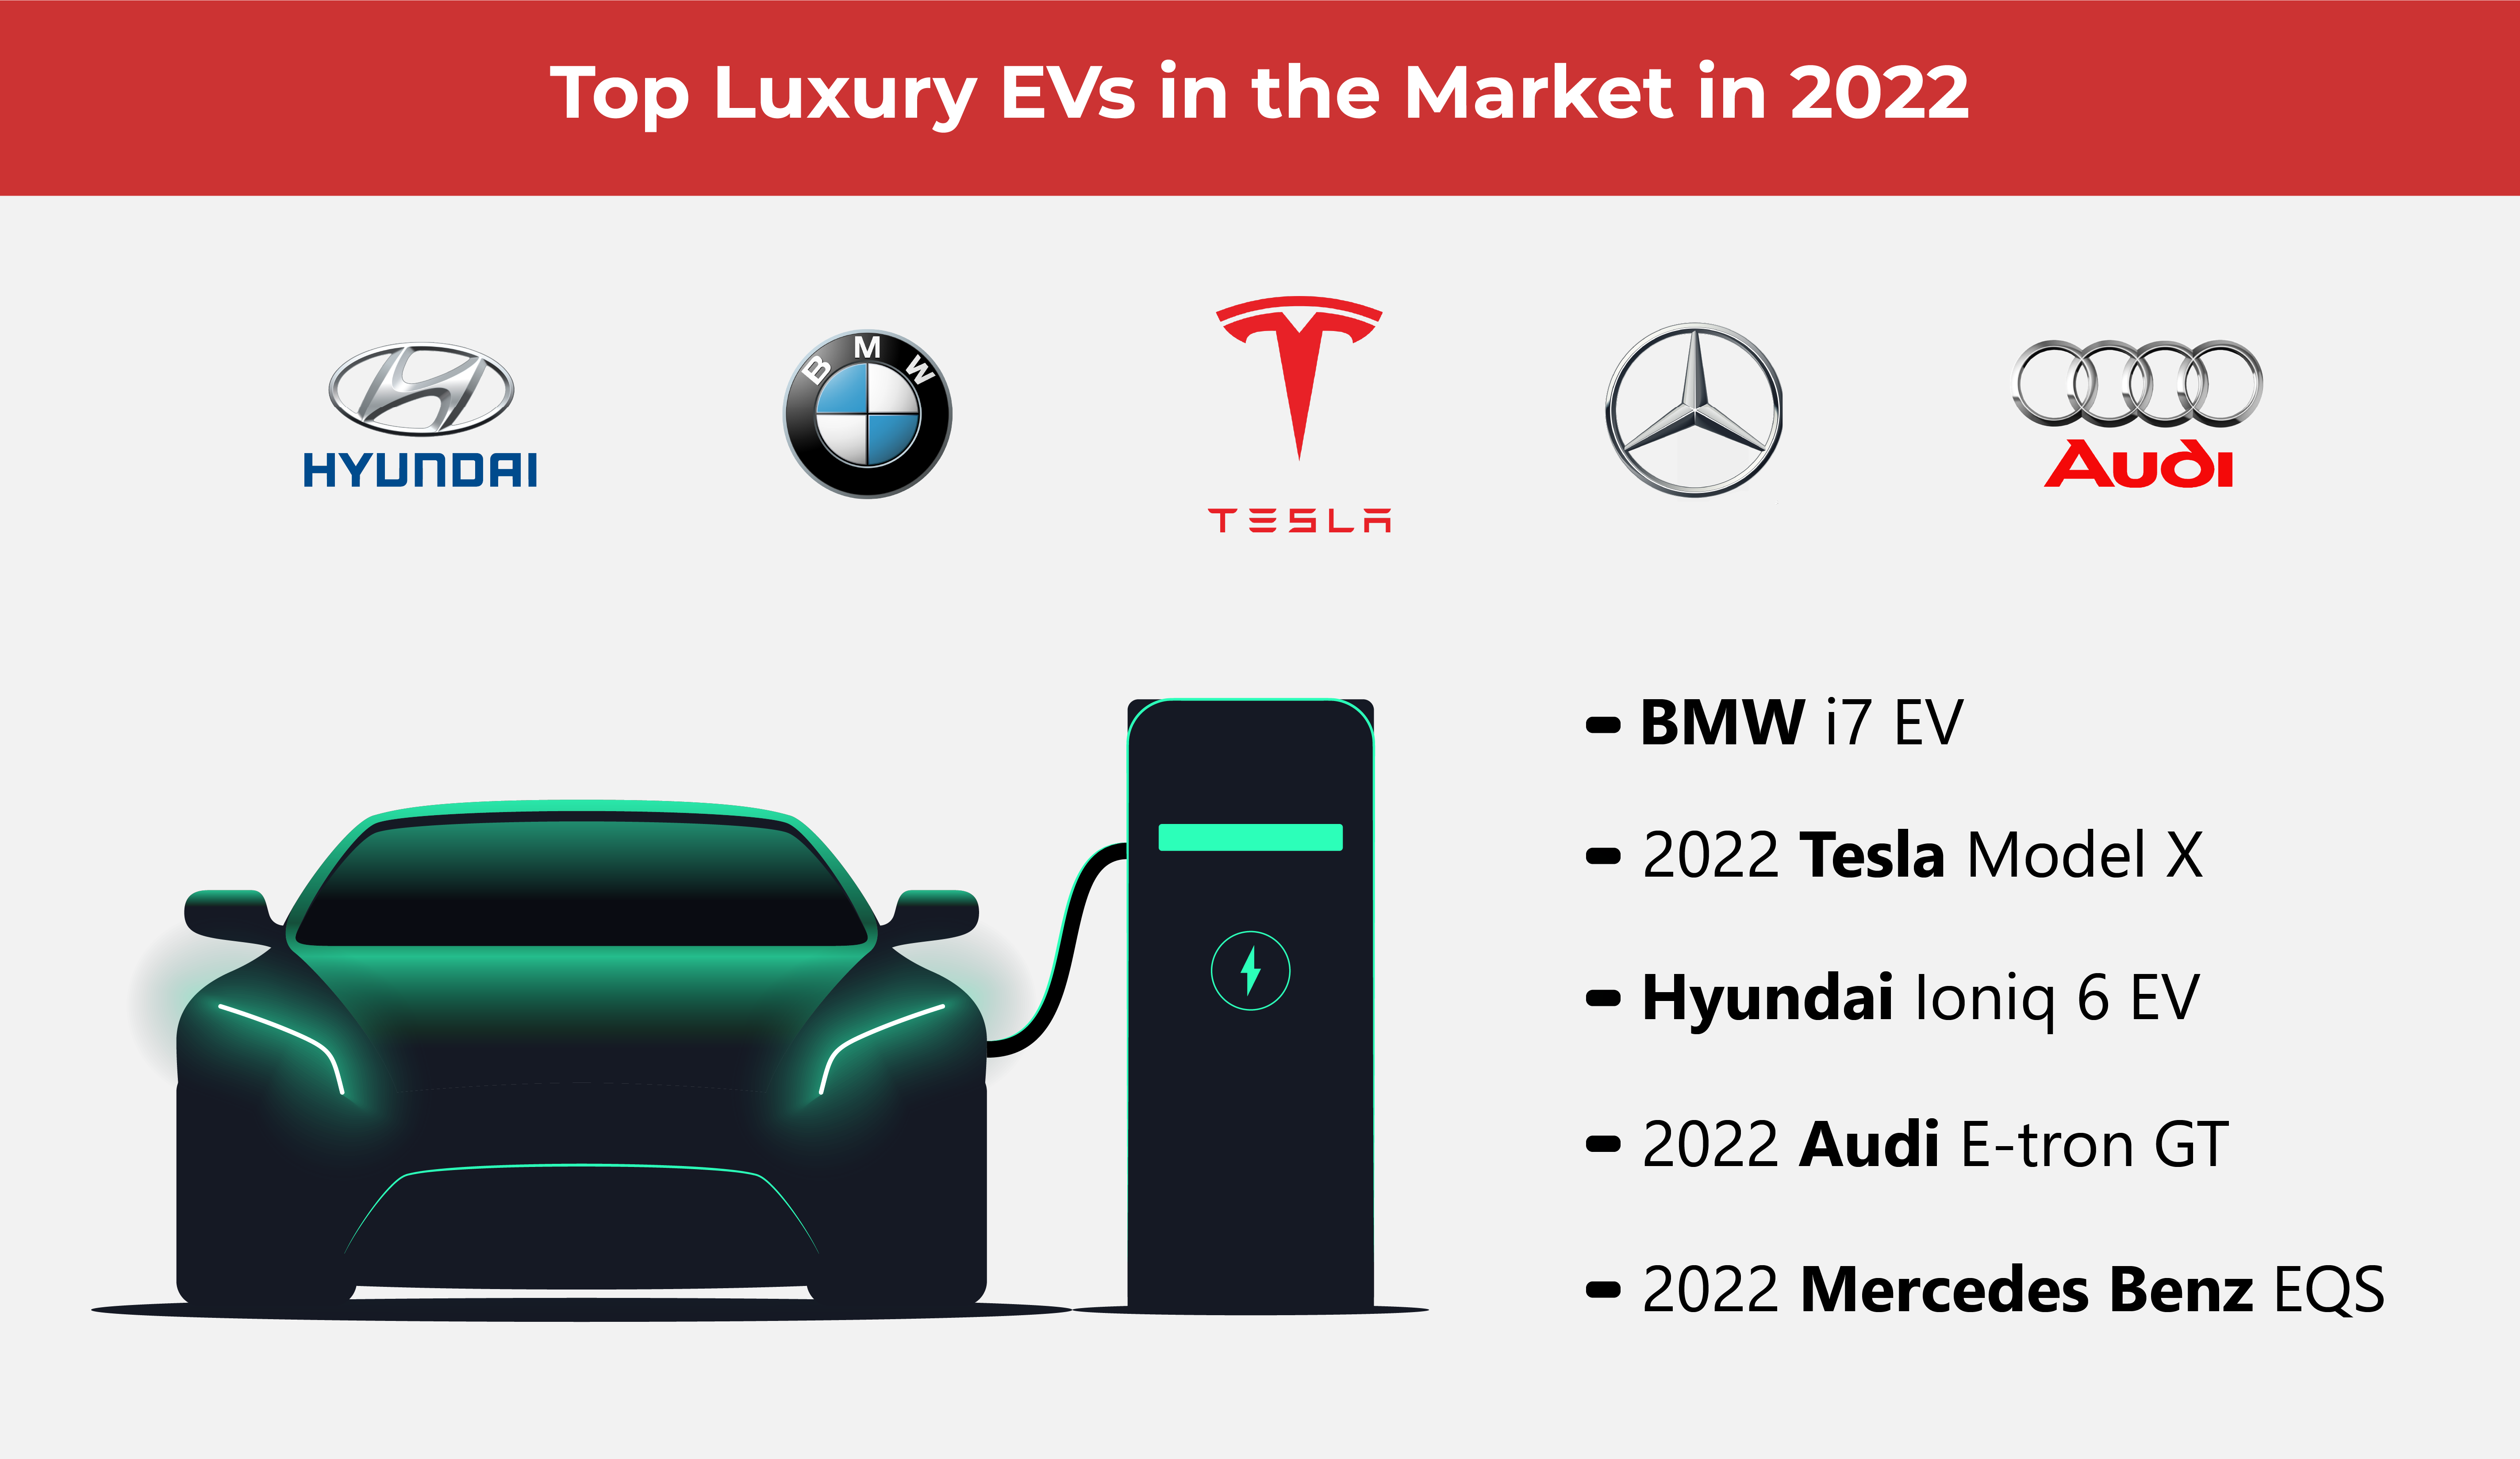 The Best of Luxury EVs in 2022